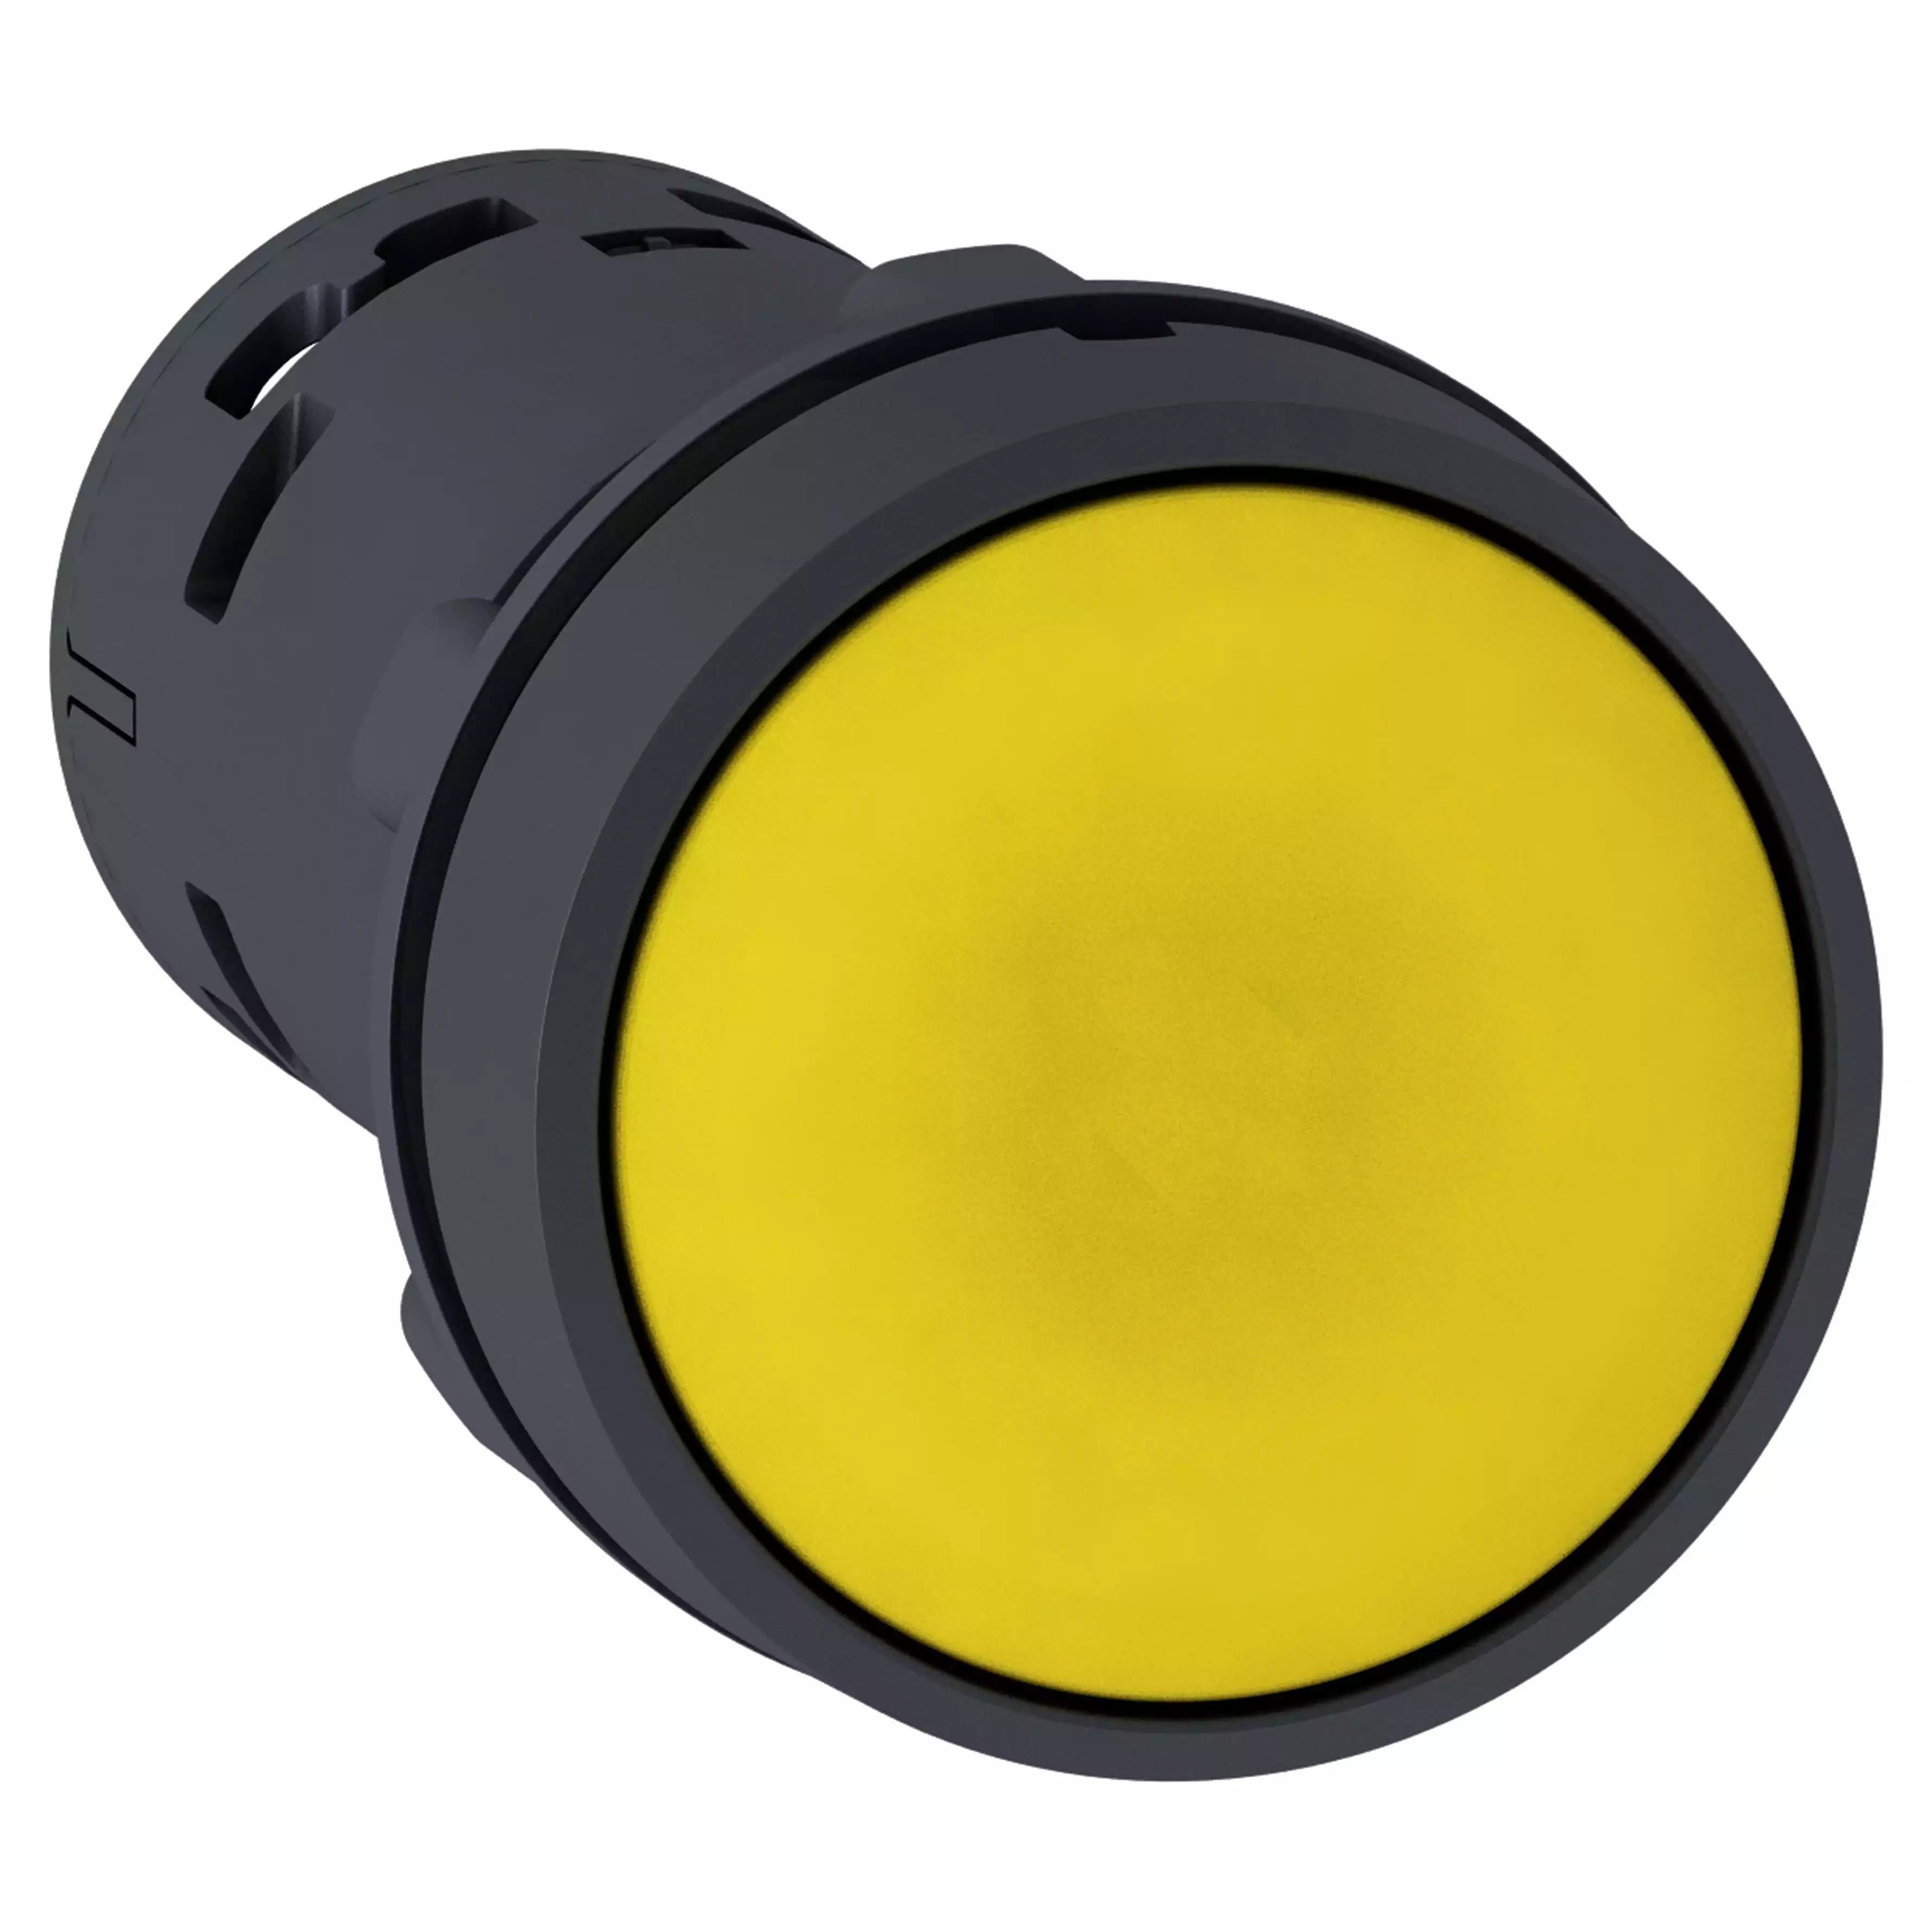 Monolithic push button, Harmony XB7, plastic, yellow, 22mm, spring return, unmarked, 1NO+1NC